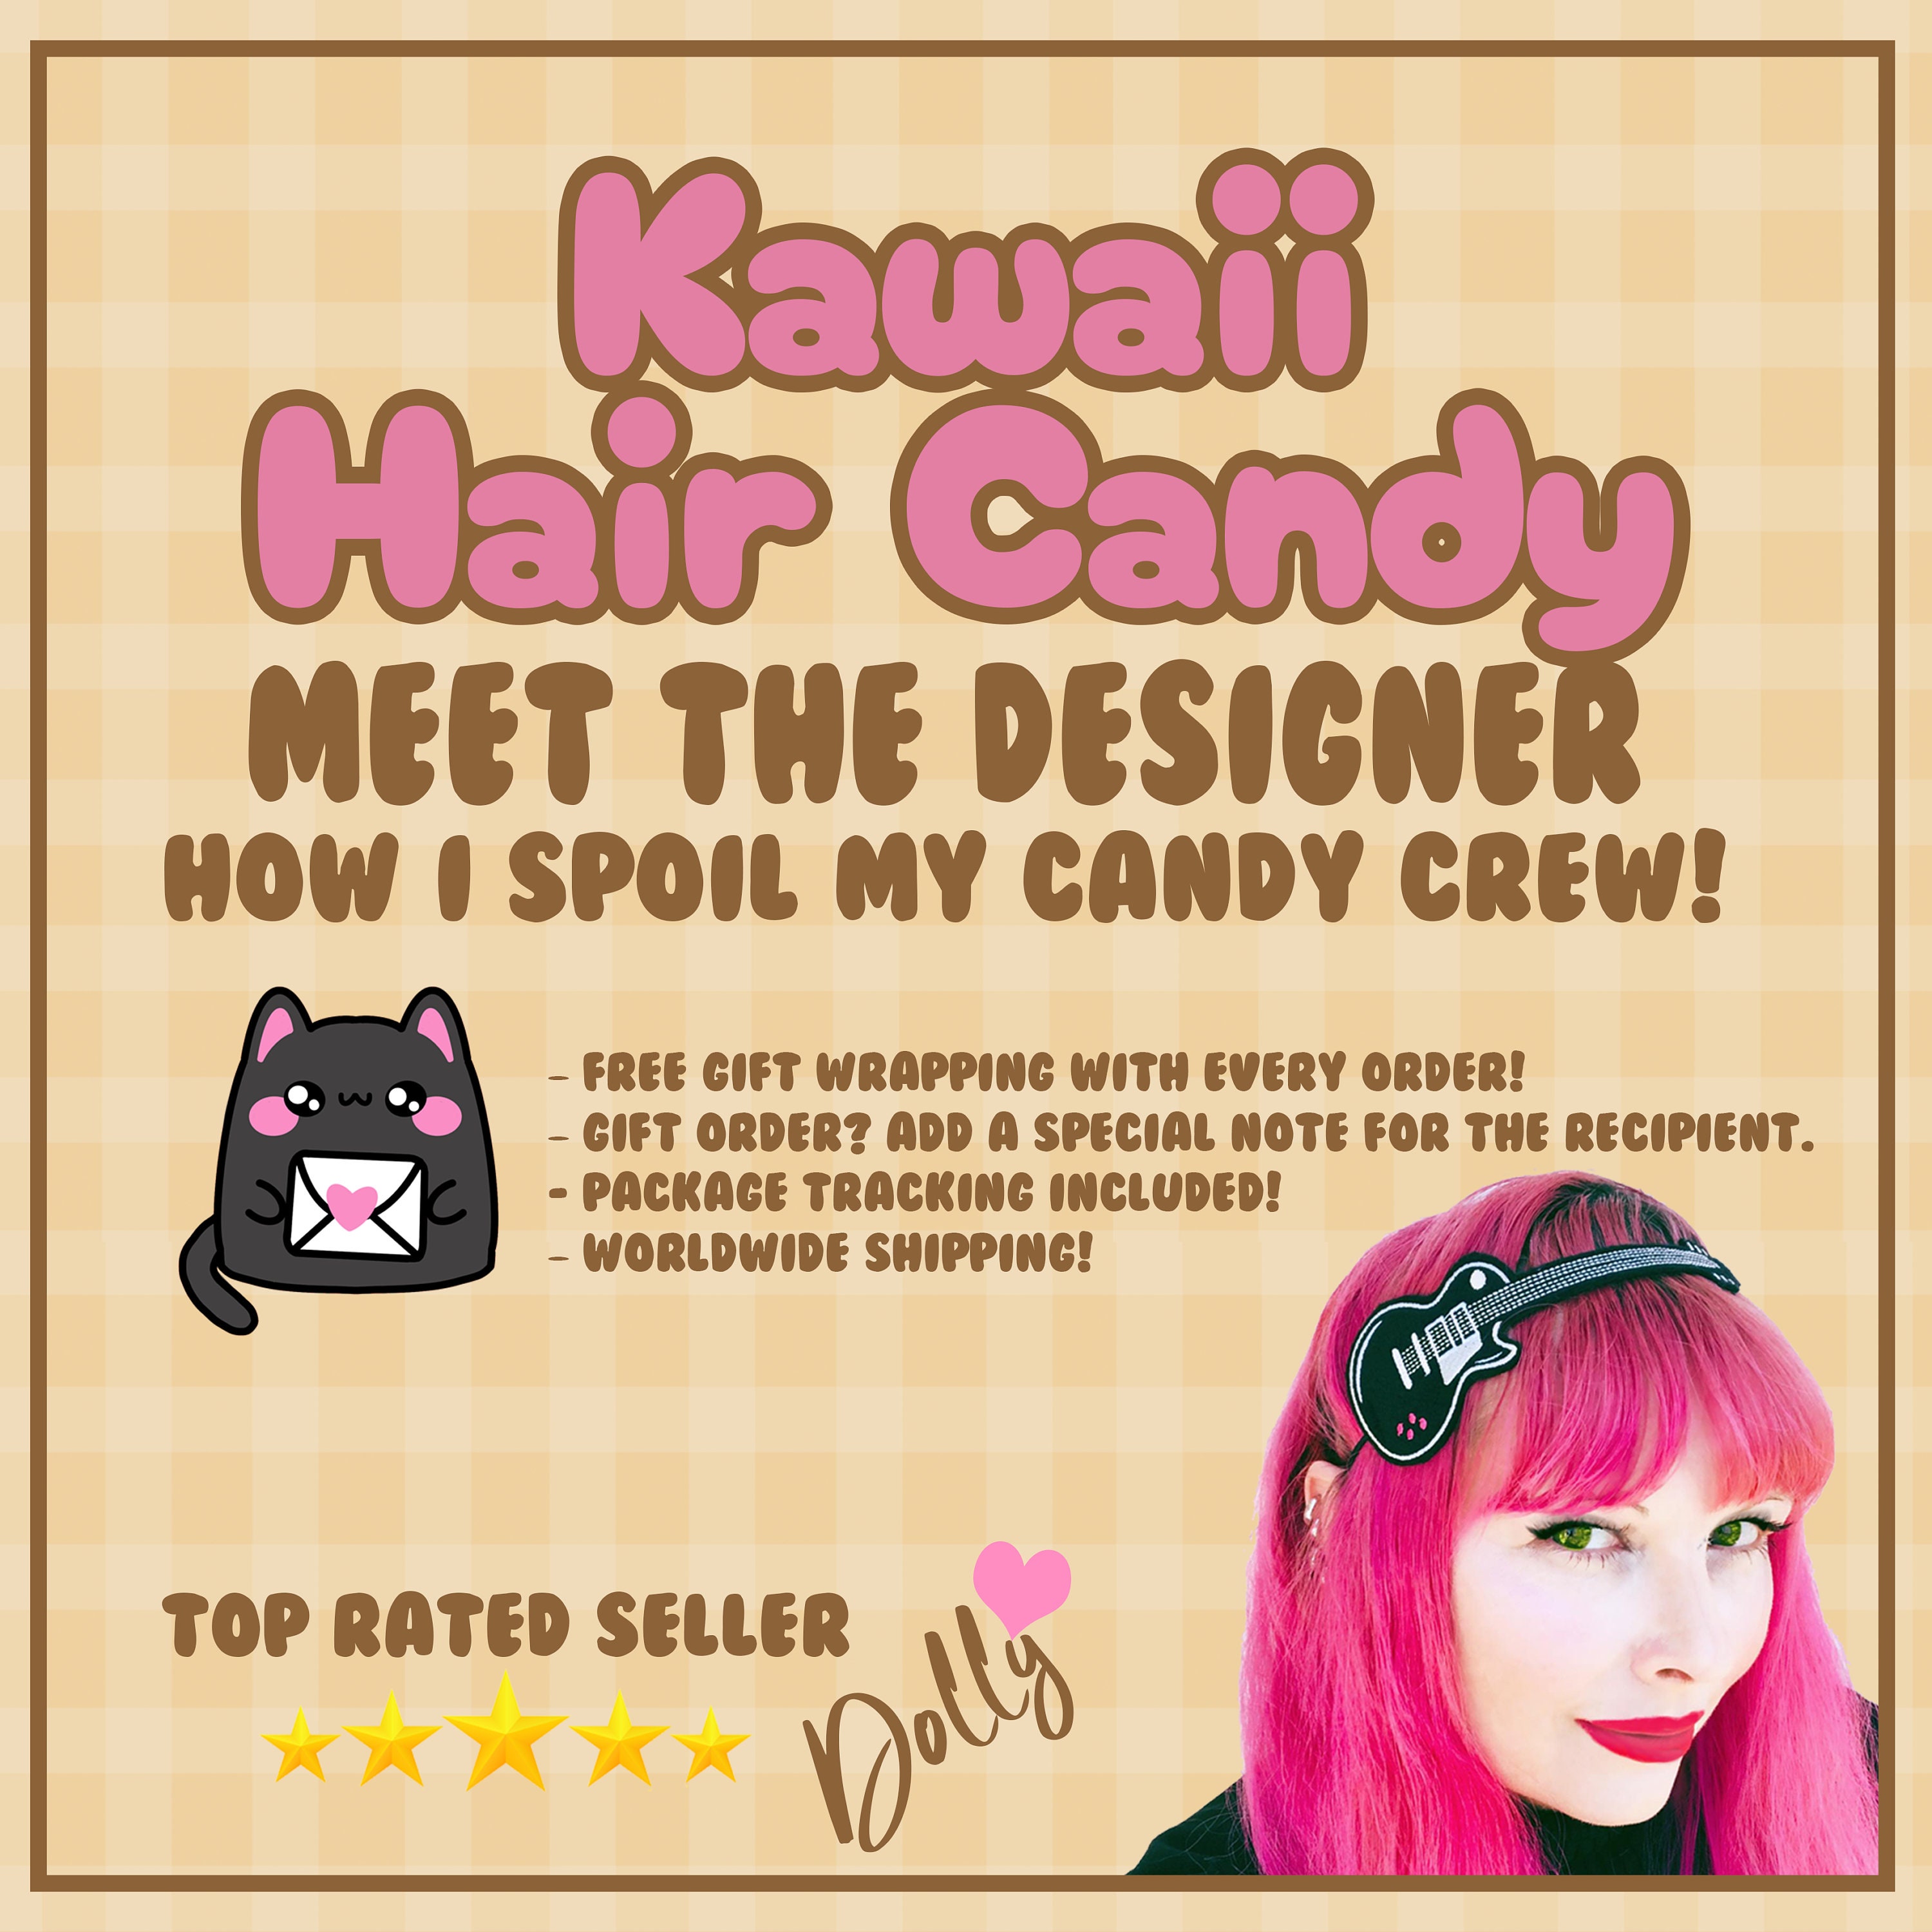 Kawaii Chibi Cotton Candy Hair Clips Set of 2 - Kawaii Hair Candy